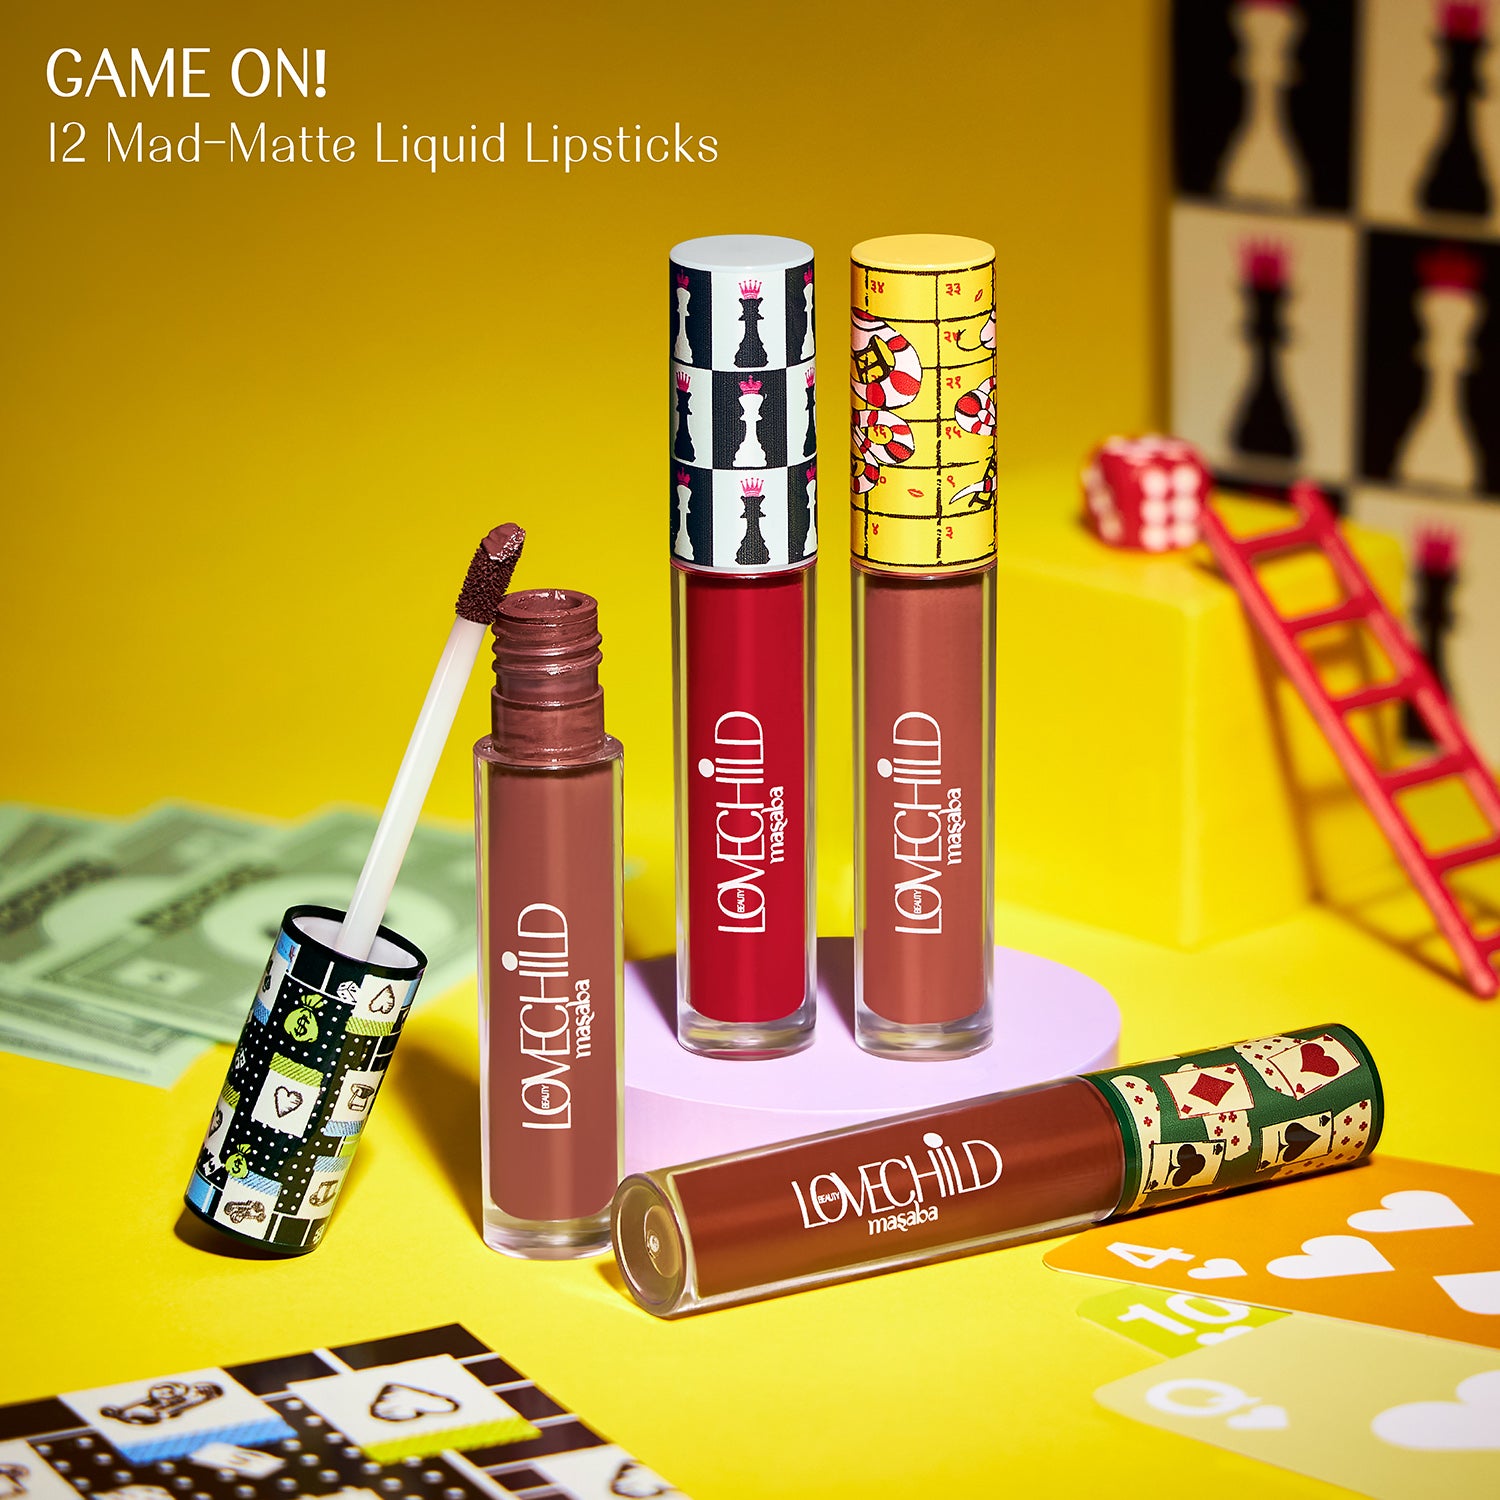 LoveChild Masaba - Game On! - 06 Double Star - Mad-Matte Liquid Lipstick